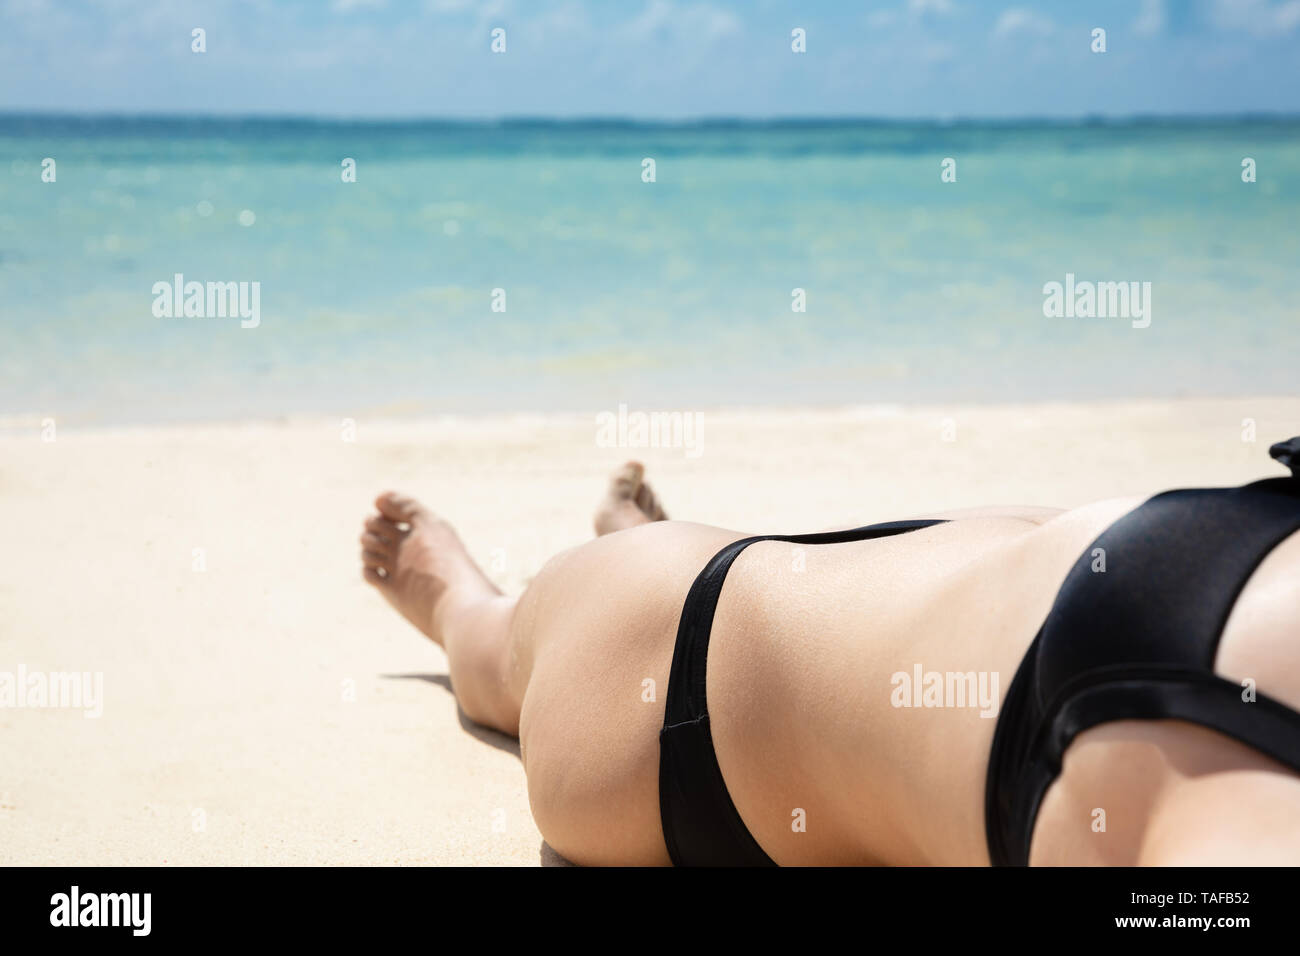 Young Woman In Black Bikini And Sunglasses Relaxing On Sandy Beach Near The Sea Stock Photo